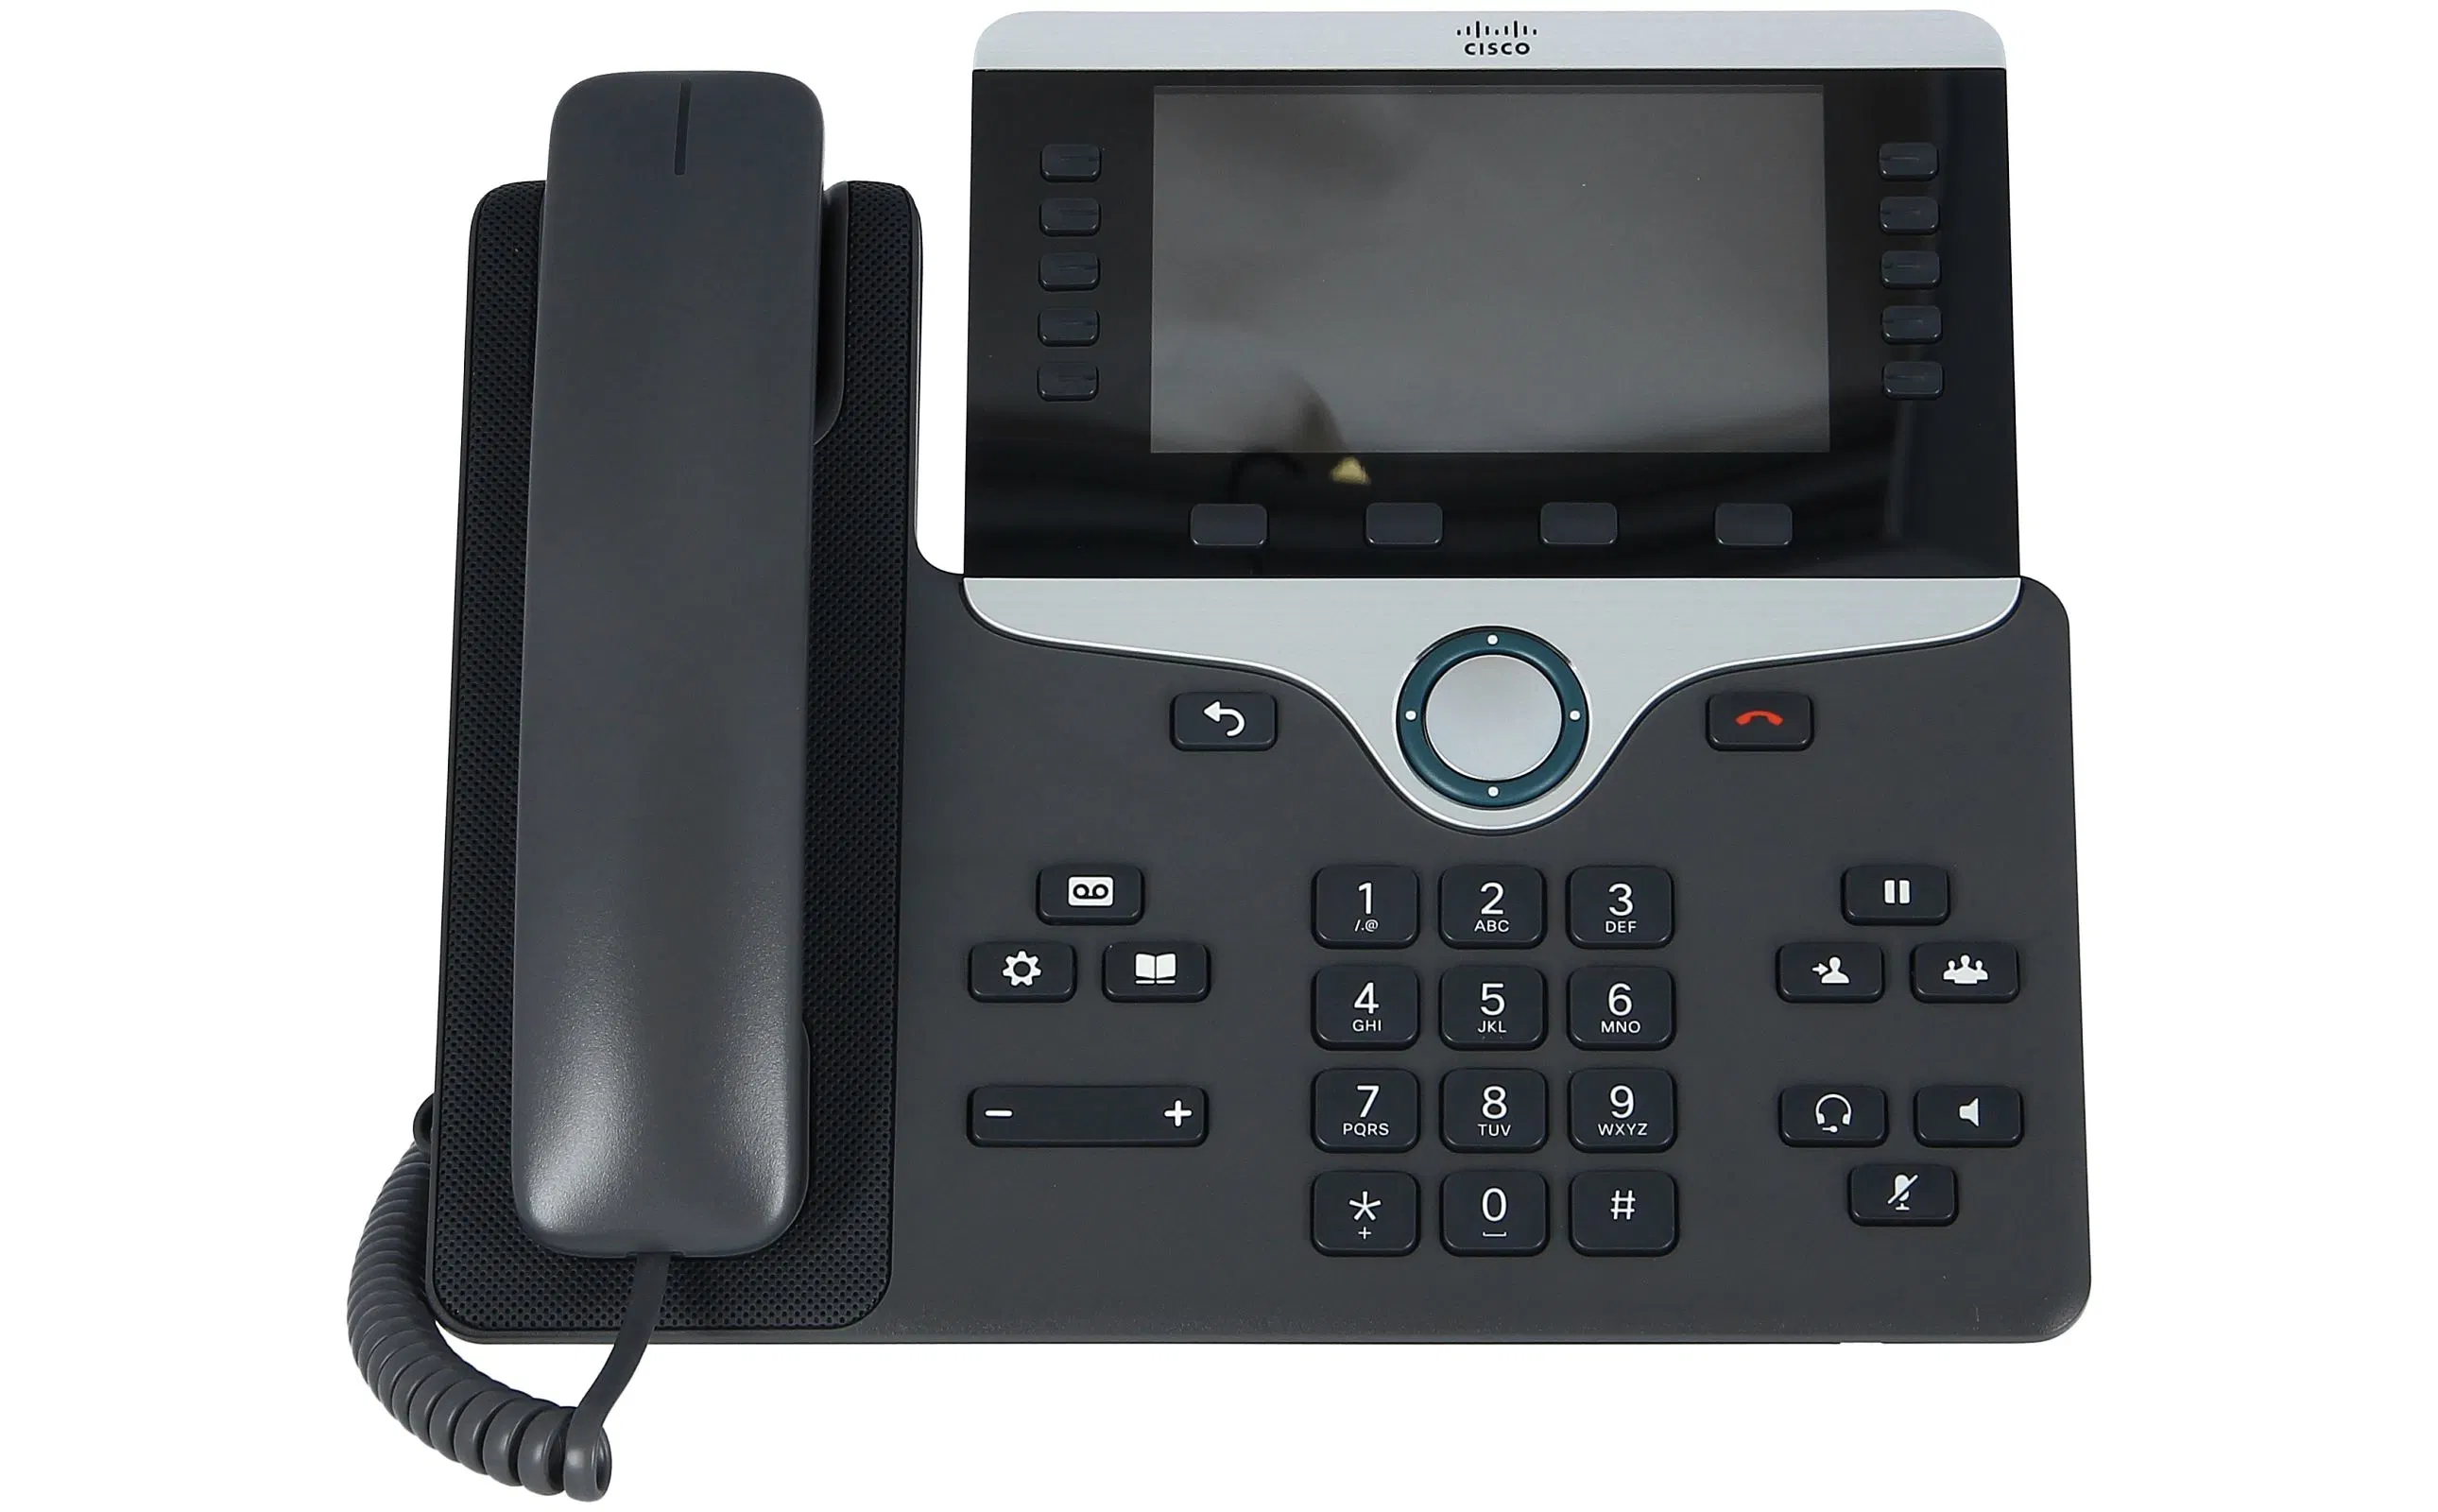 CISCO 8800 Series 5 Programmable Line Keys Business-Class Desktop IP Phone Cp-8811-K9